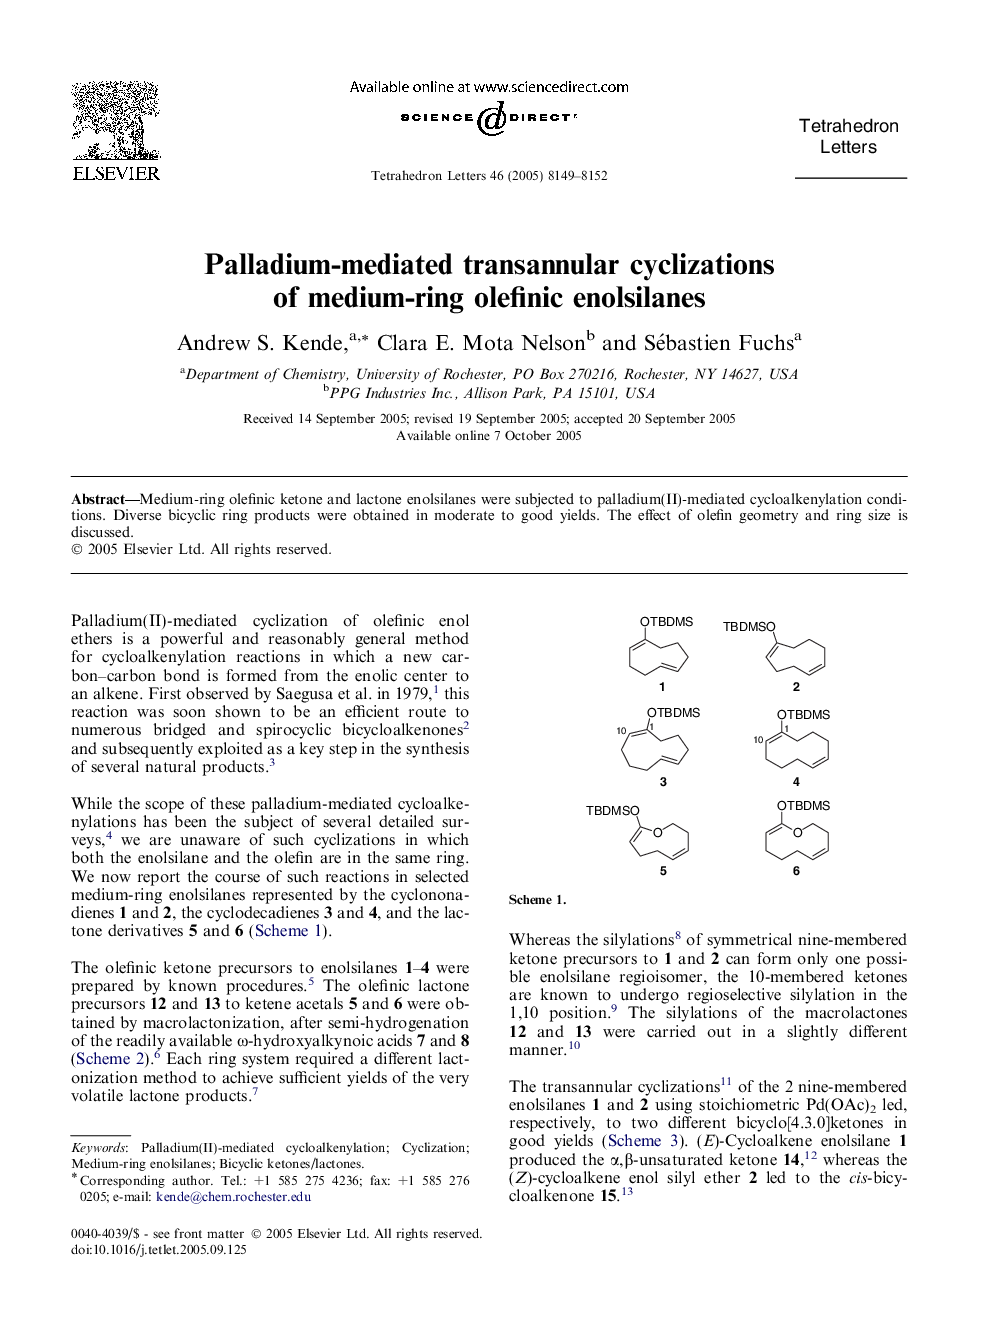 Palladium-mediated transannular cyclizations of medium-ring olefinic enolsilanes